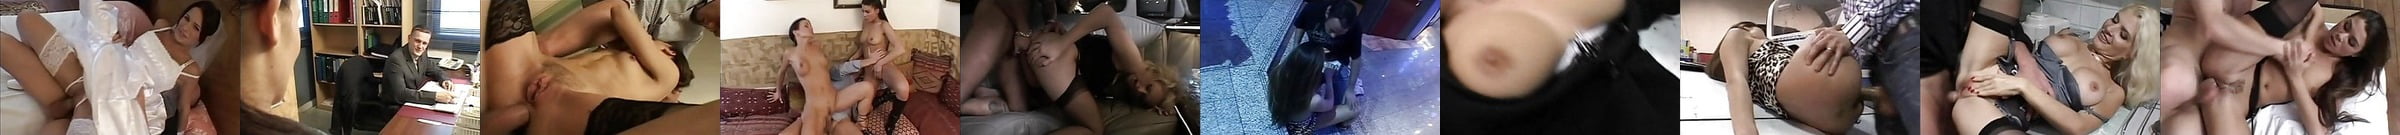 Nina Roberts Free Porn Star Videos Xhamster